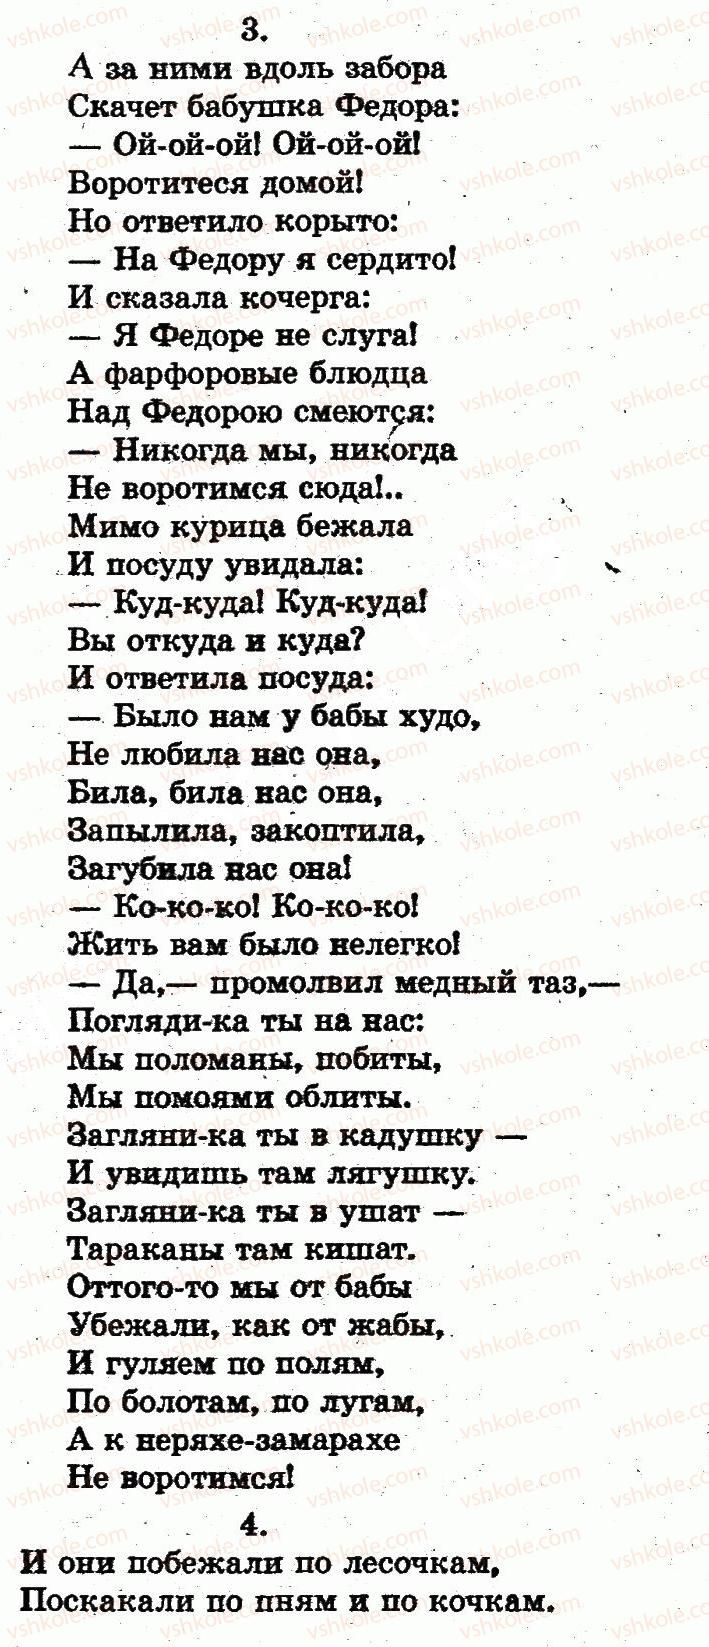 1-russkij-yazyk-in-lapshina-nn-zorka-2012--ovoschi-frukty-страница124-rnd7741.jpg